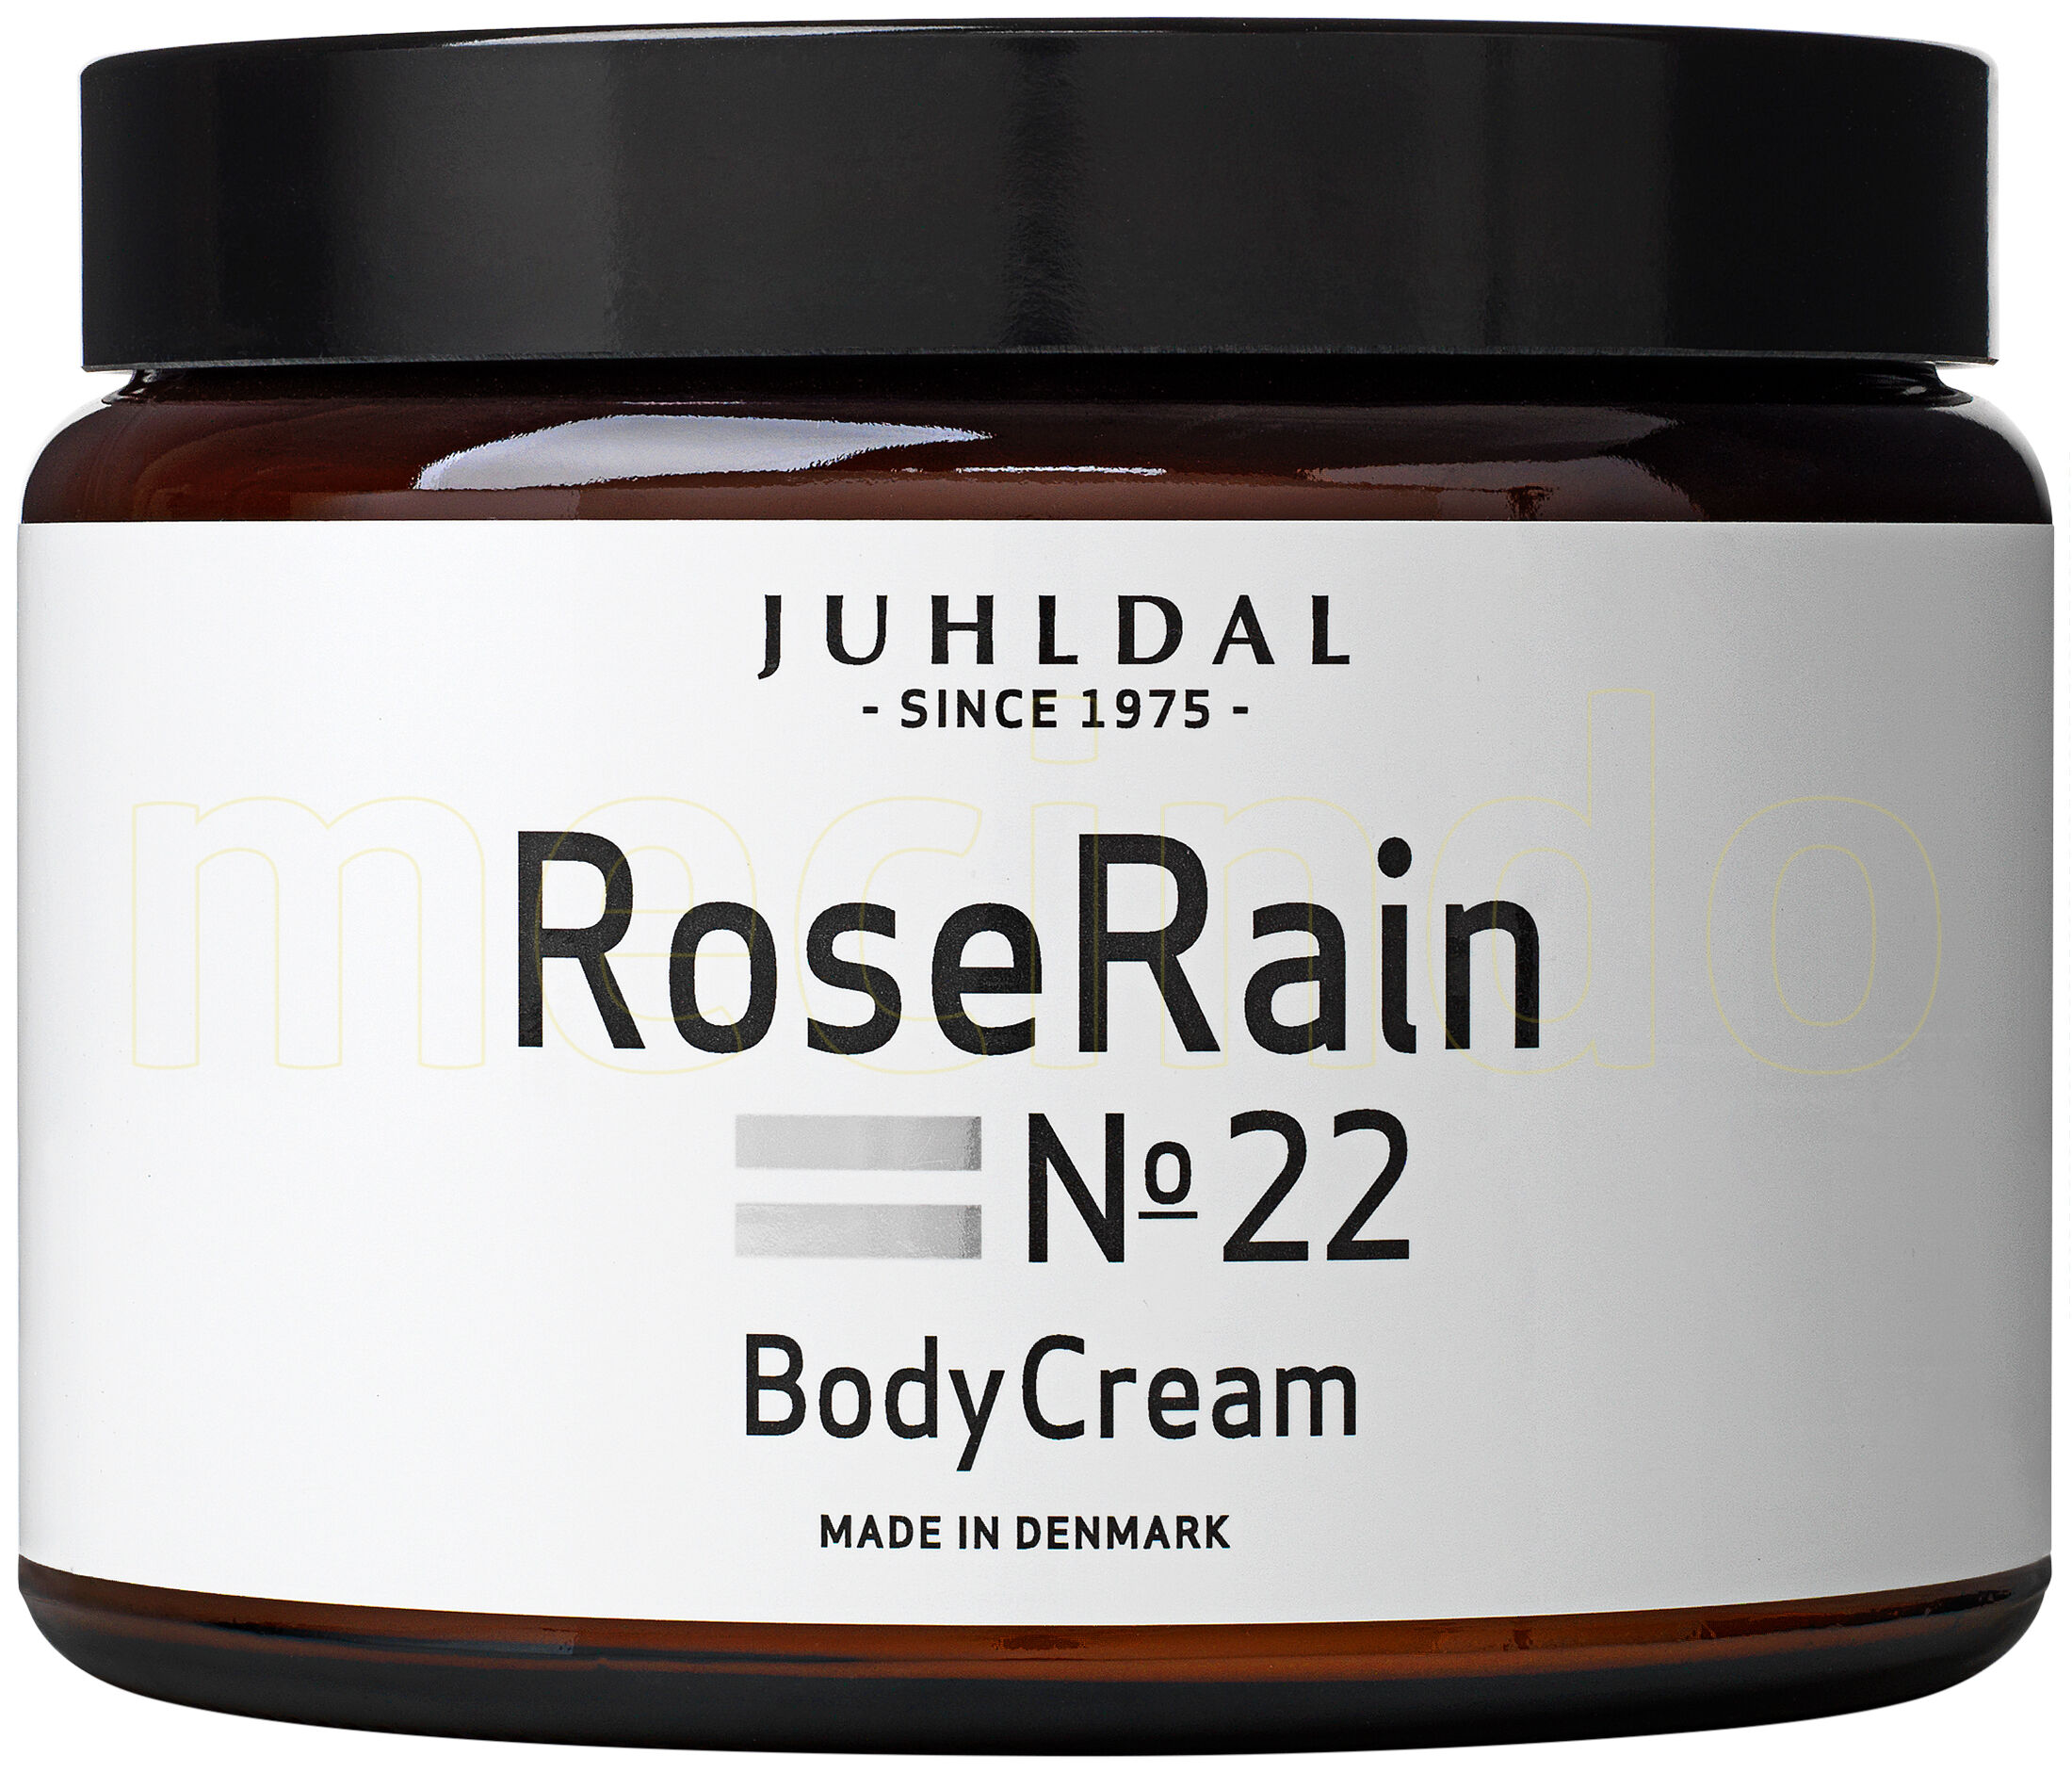 Juhldal RoseRain No 22 Body Cream - 500 ml